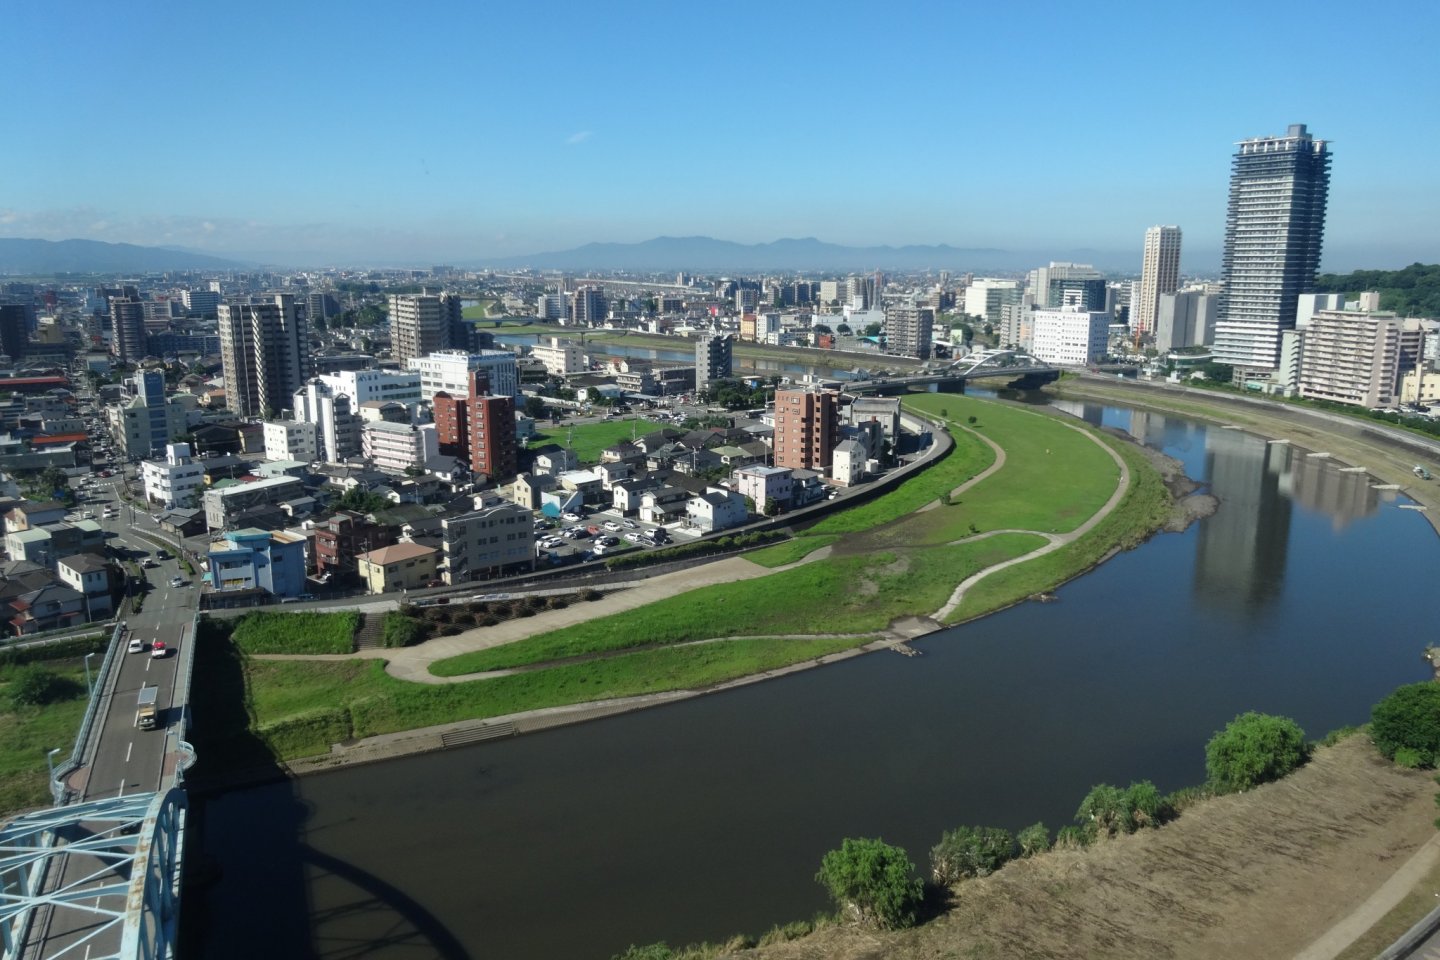 View of Kumamoto's Shirakawa river from the rooms of the ANA New Sky Hotel